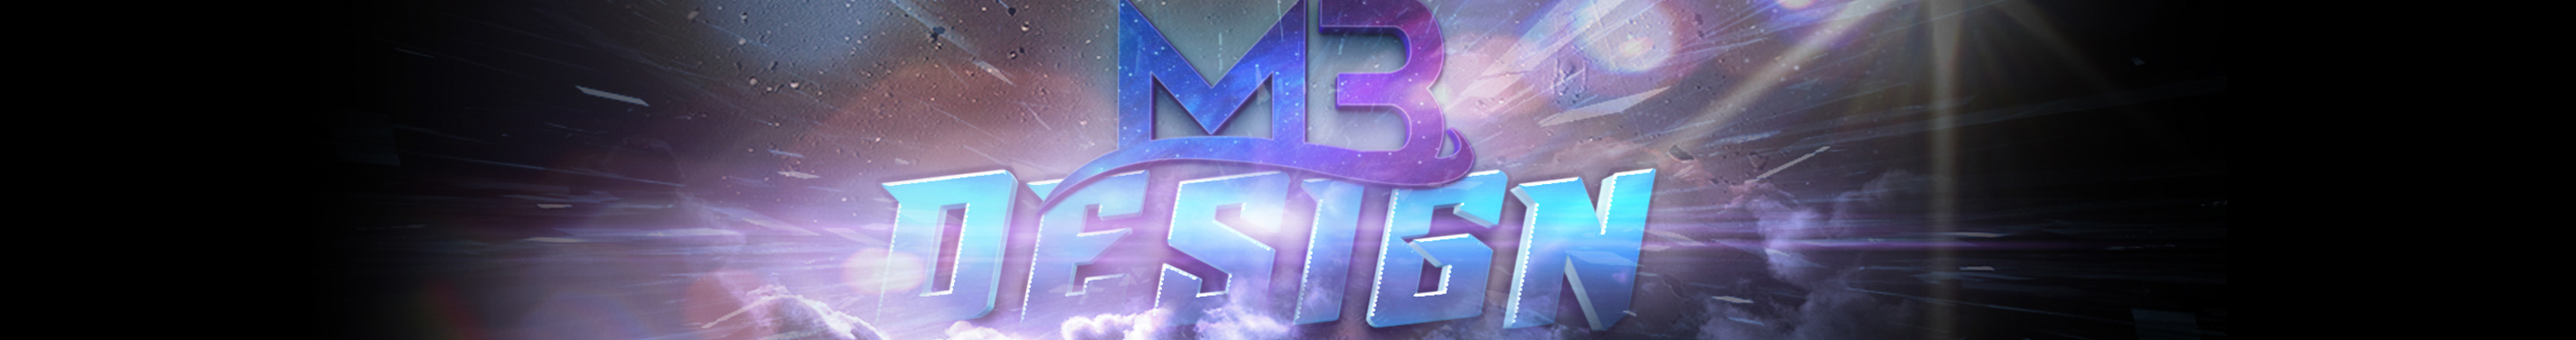 MB Design's profile banner